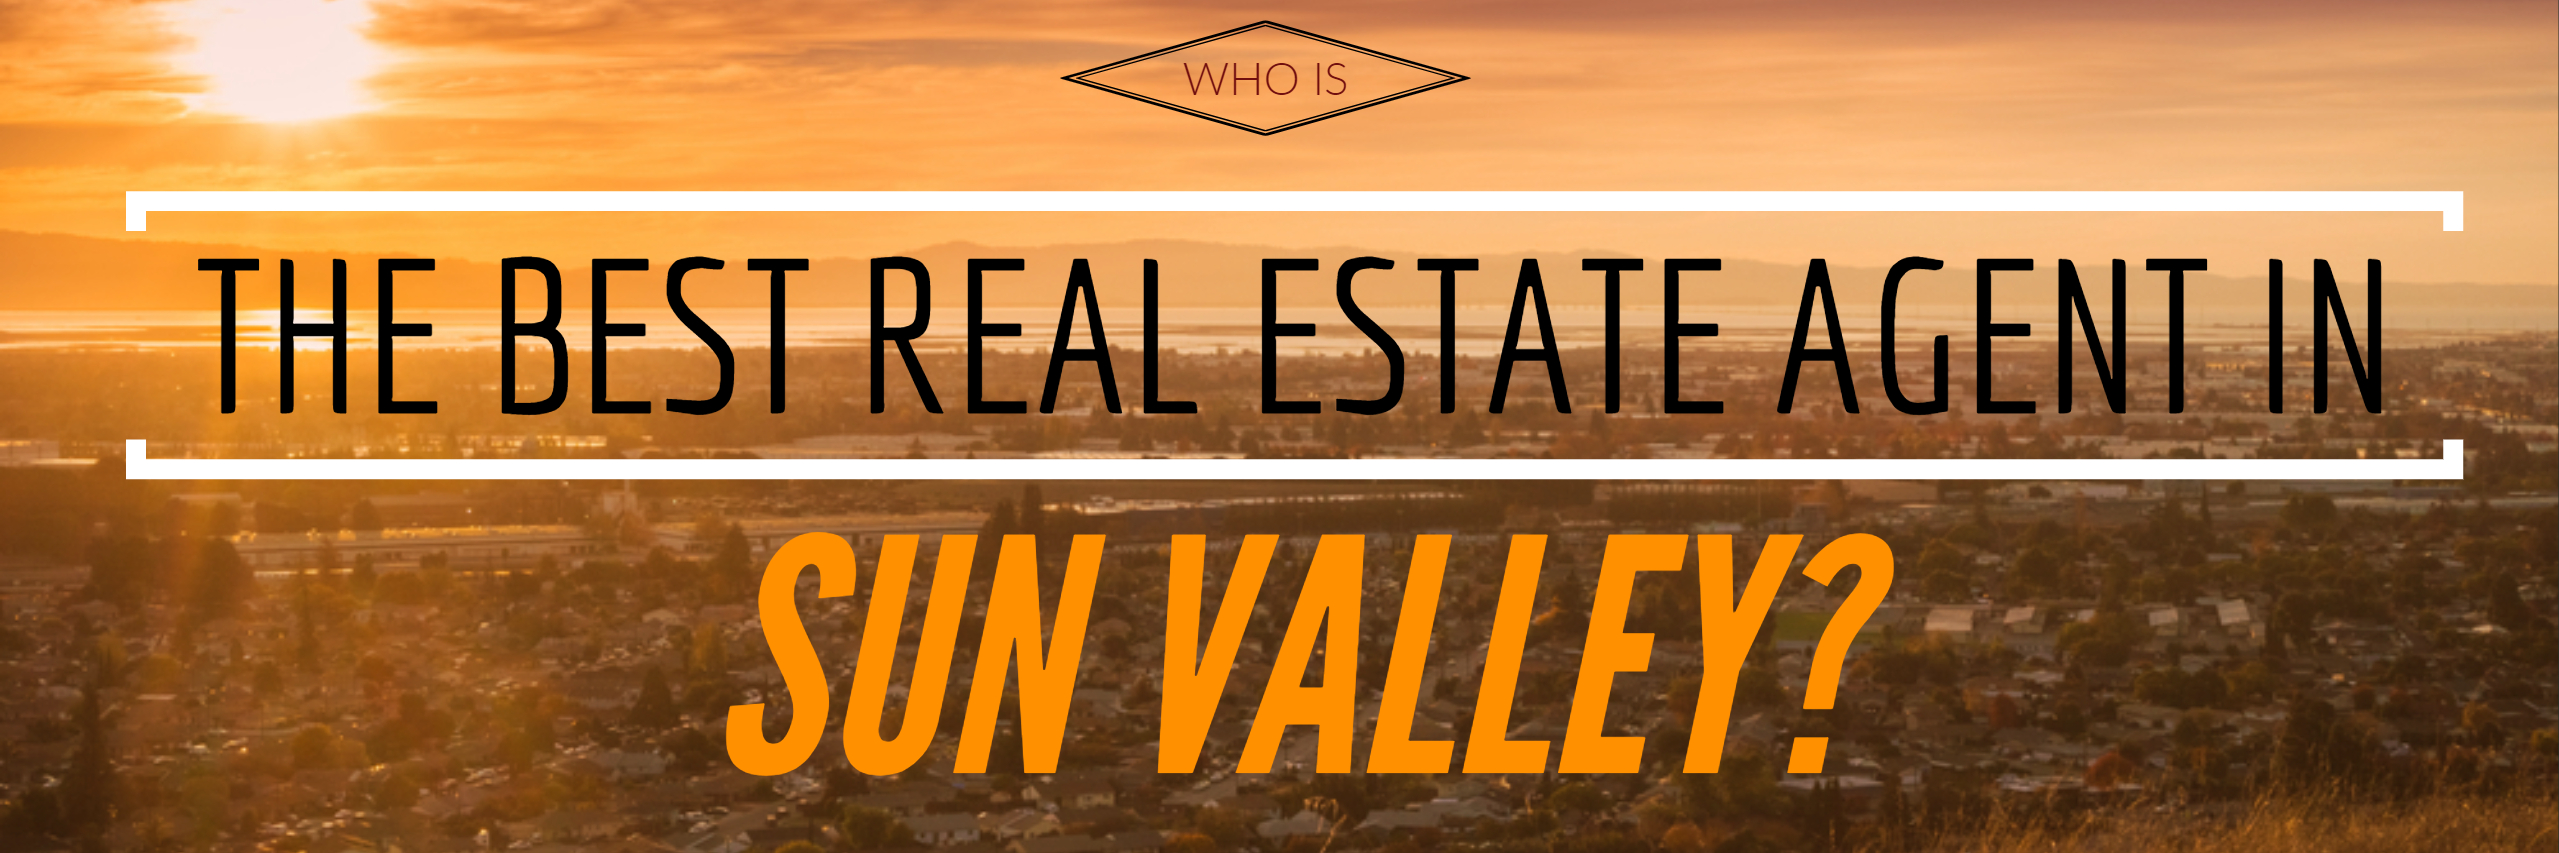 best real estate agent in Sun Valley best realtor in Sun Valley sell my home in Sun Valley homes for sale in Sun Valley top ten best real estate agent in Sun Valley Paul Argueta 